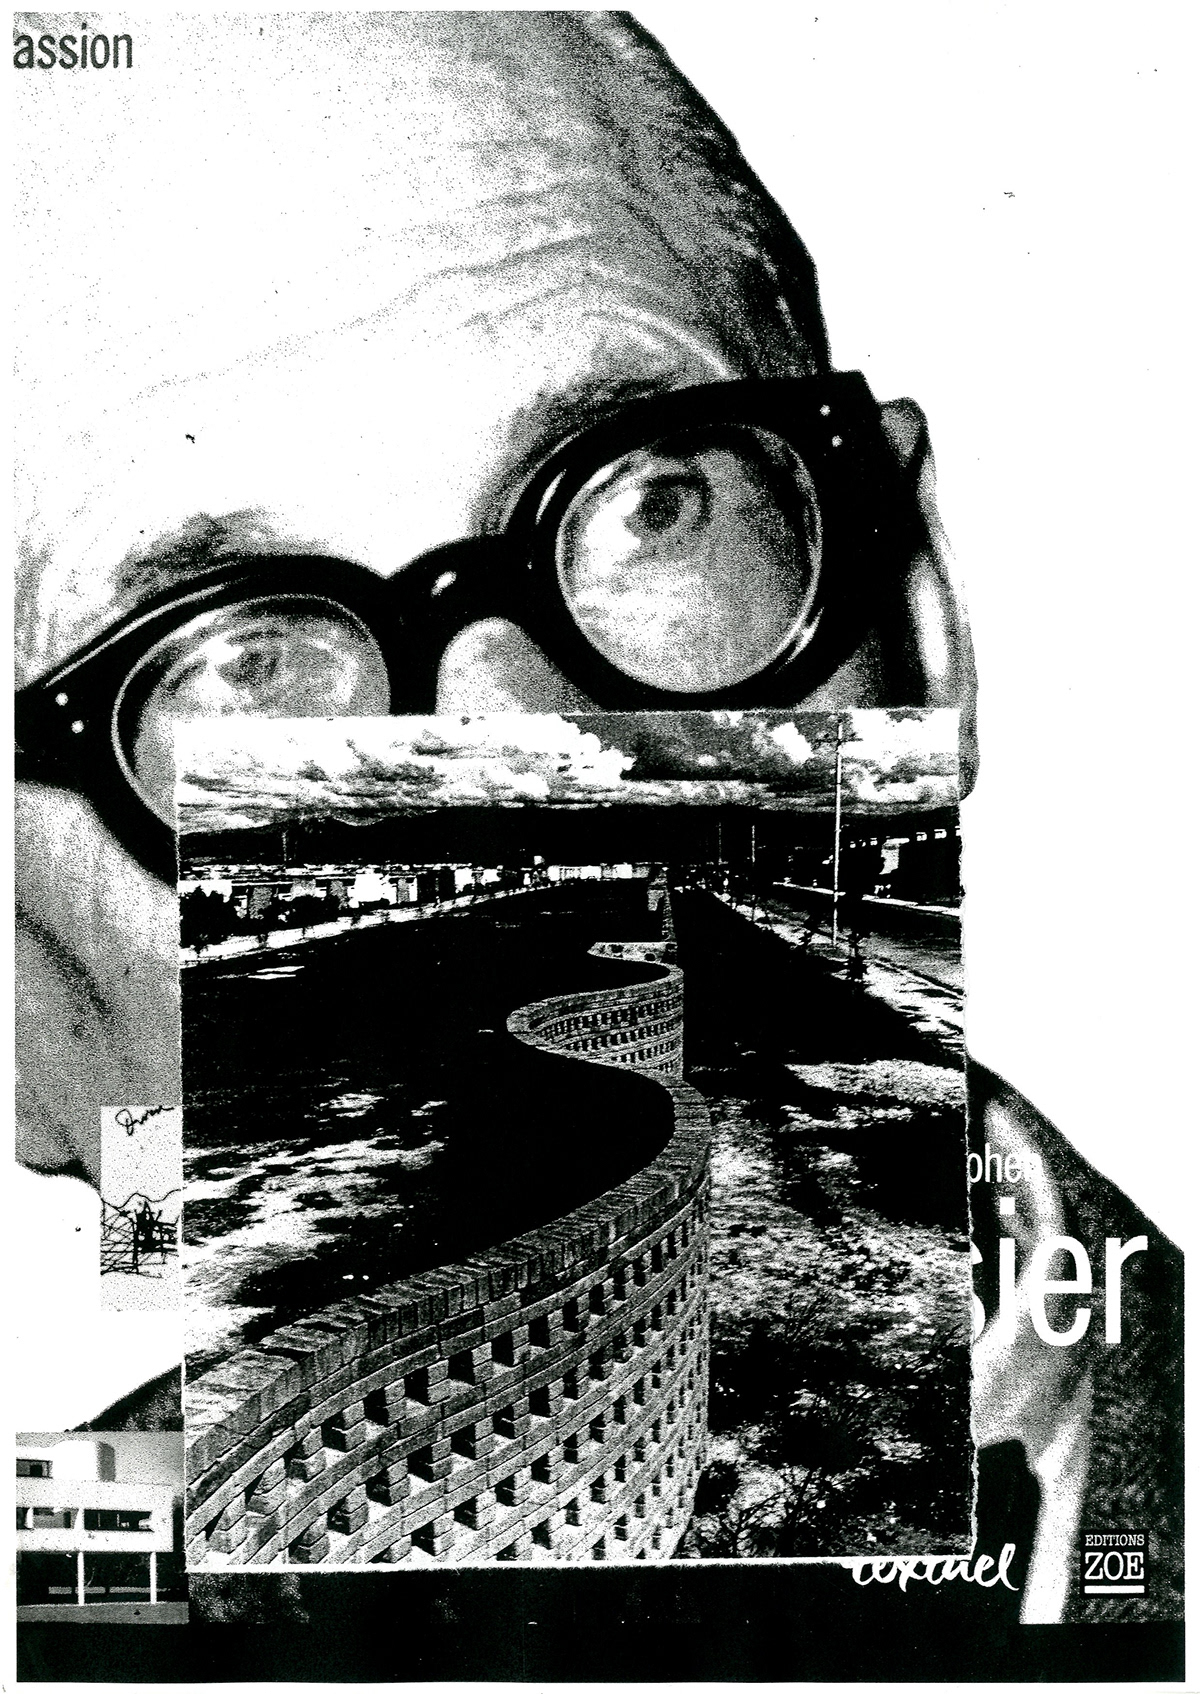 architects collage masks star system Icon Corbusier ZAHA HADID Oscar Niemeyer bruno taut Frank Lloyd Wright Tadao Ando mies Alvar Aalto maria lima